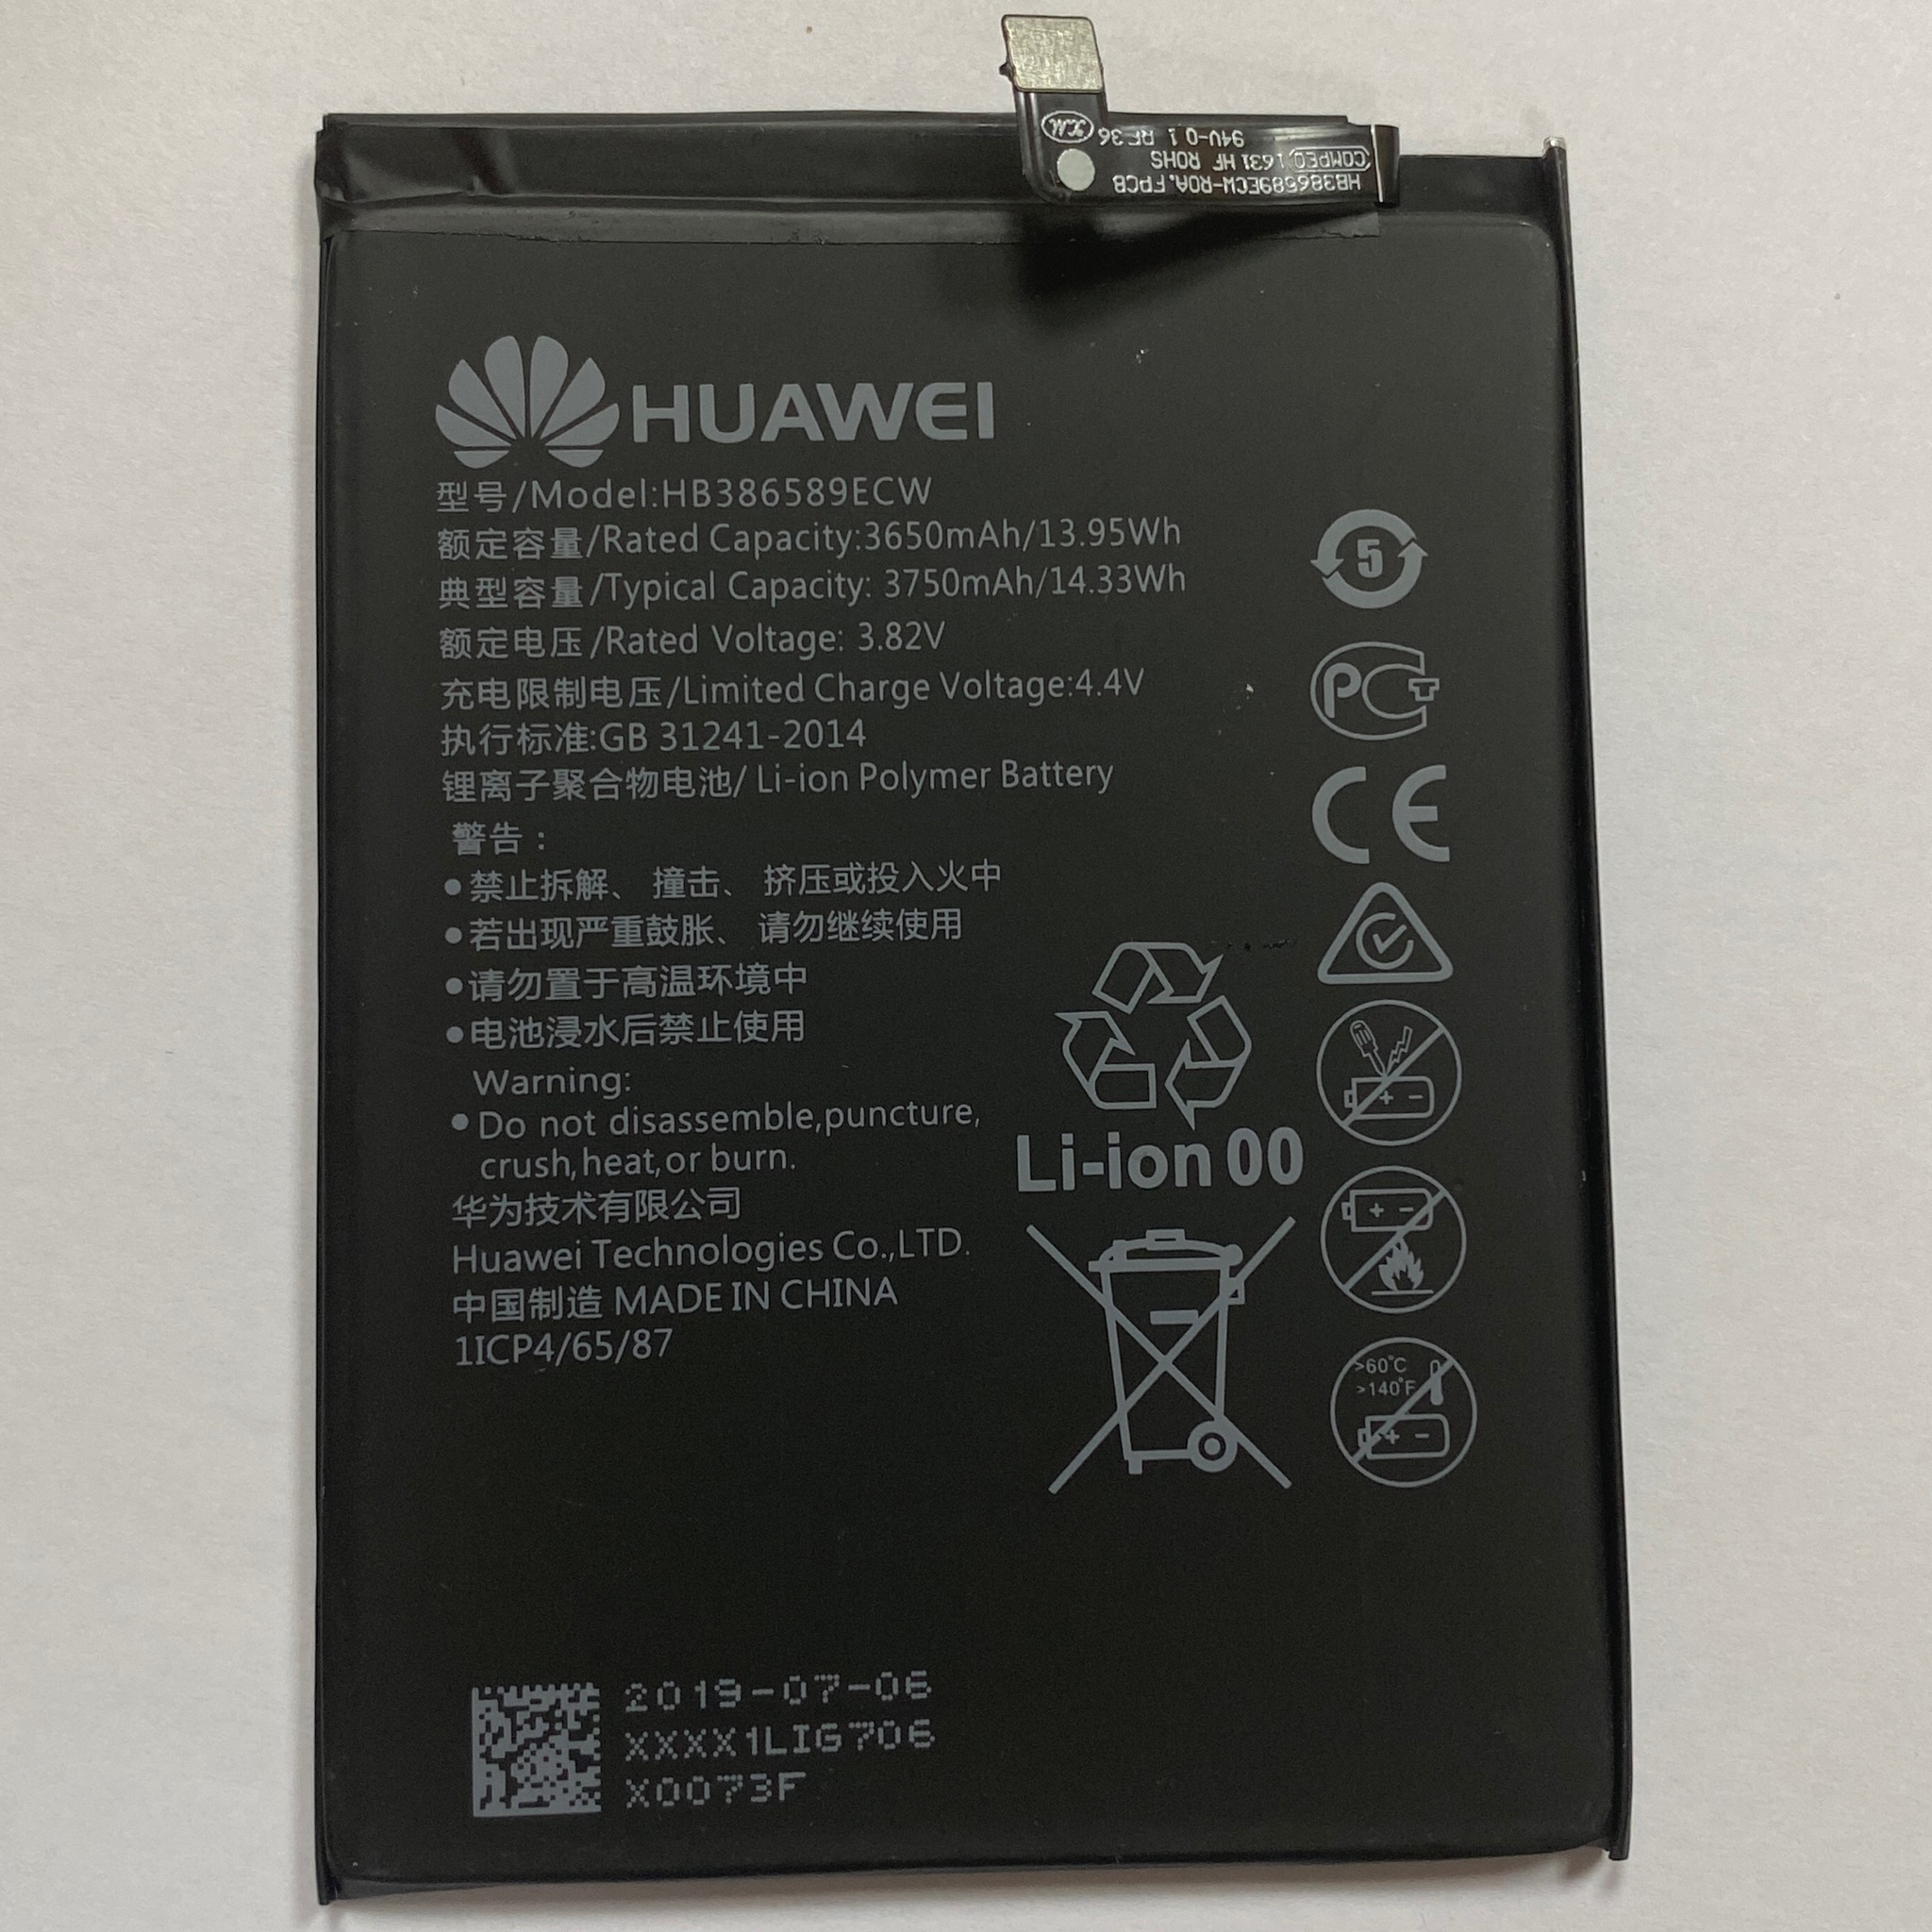 Honor 20 pro аккумулятор. Hb406689ecw модель телефона. Huawei hb446486ecw модель телефона. Аккумулятор для Huawei y7 2017/p40 Lite e/9c (hb406689ecw/hb396689ecw). Hb446486ecw.